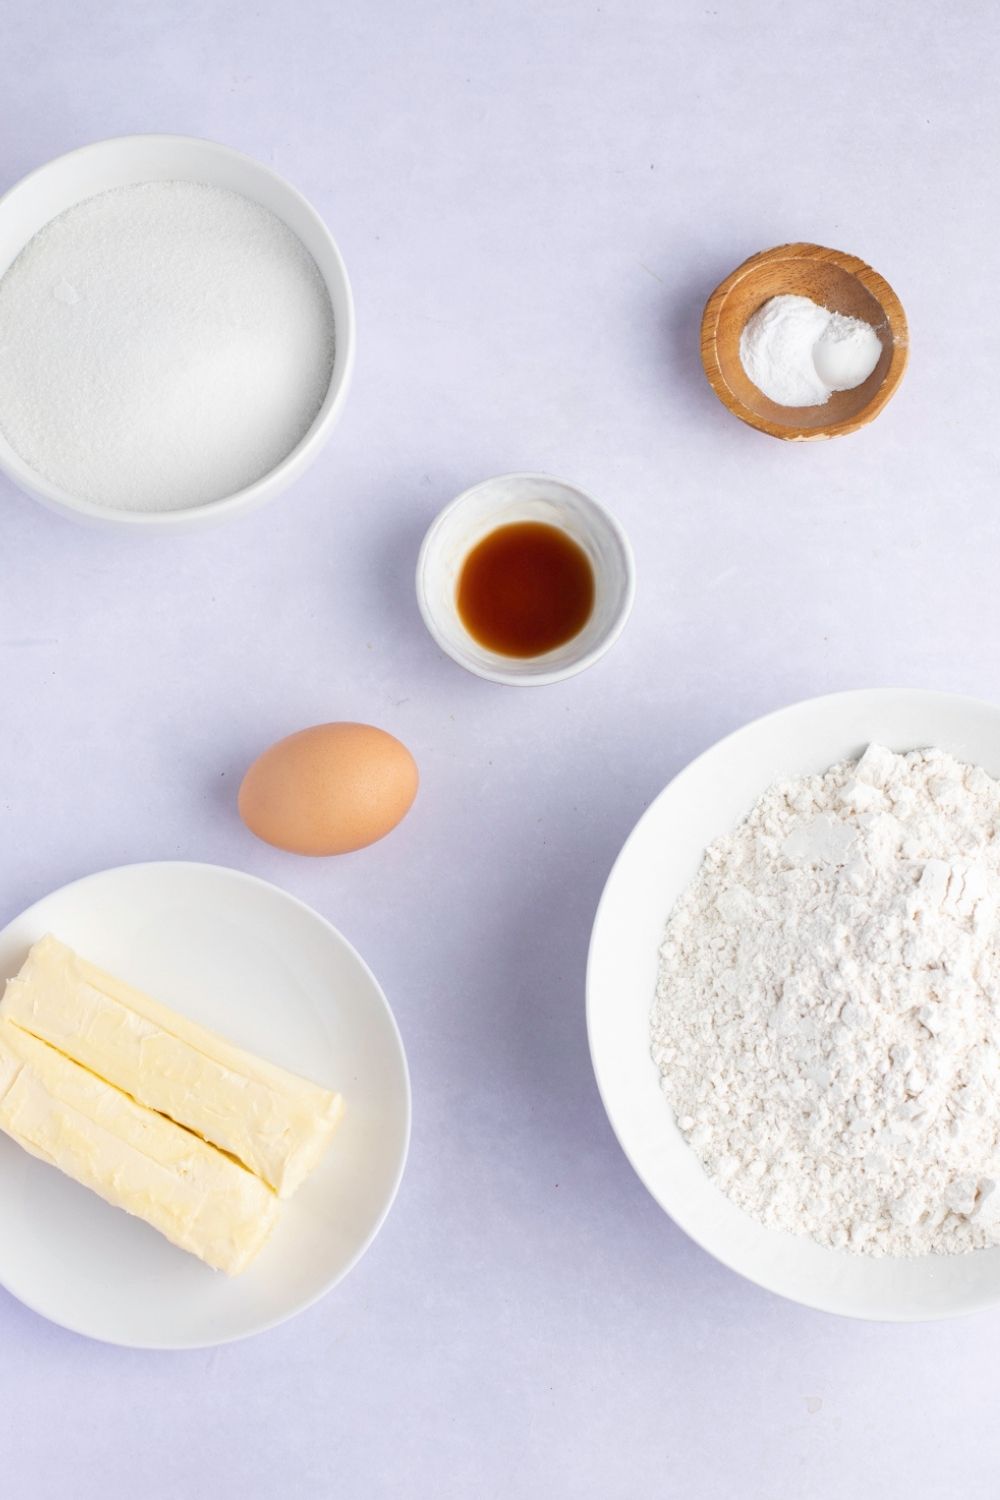 Sugar Cookies Ingredients -  Flour, Baking Soda, Baking Powder, Butter, Sugar and Eggs